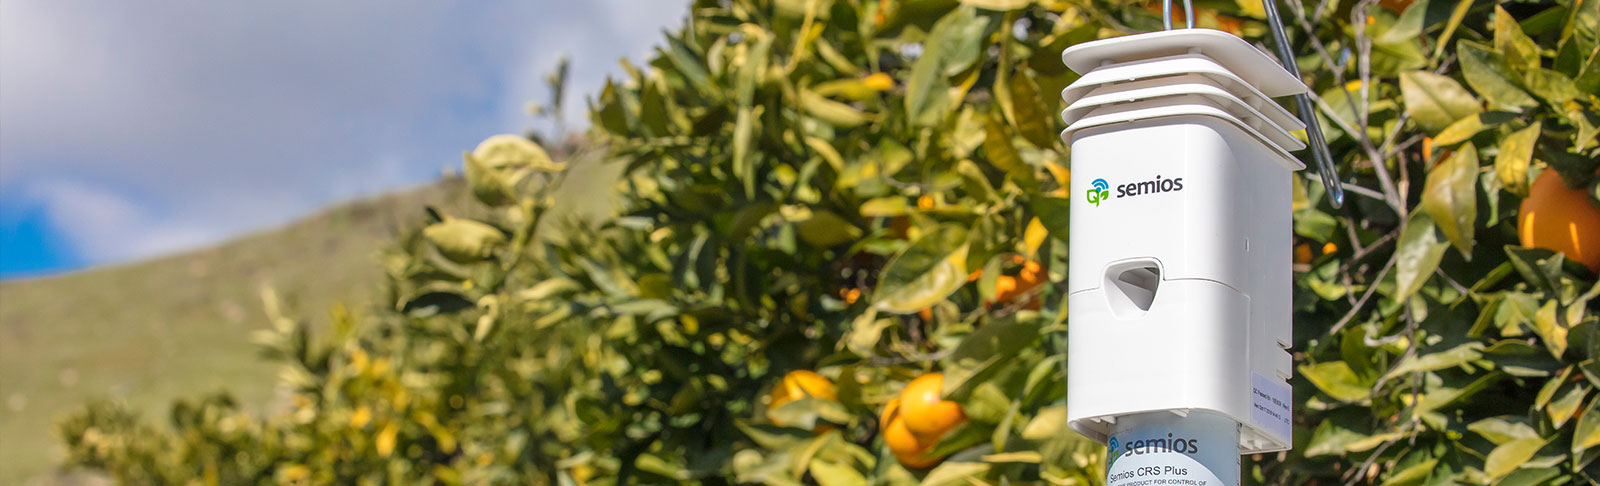 Semios pheromone dispenser hanging in a citrus orchard